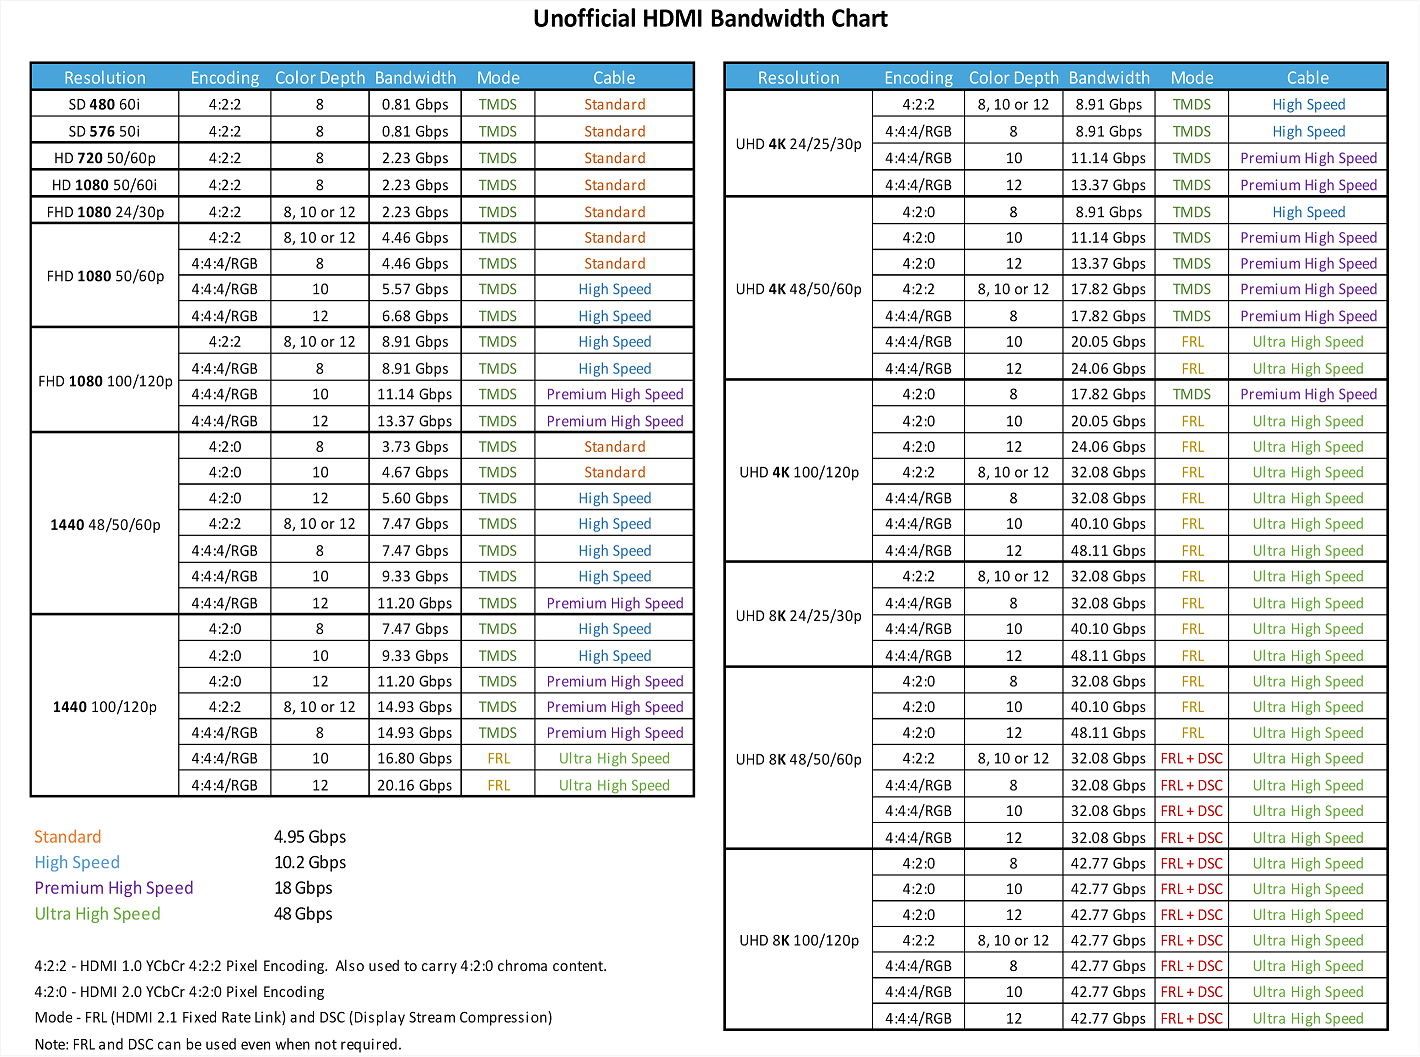 Unofficial HDMI Bandwidth Chart -.png